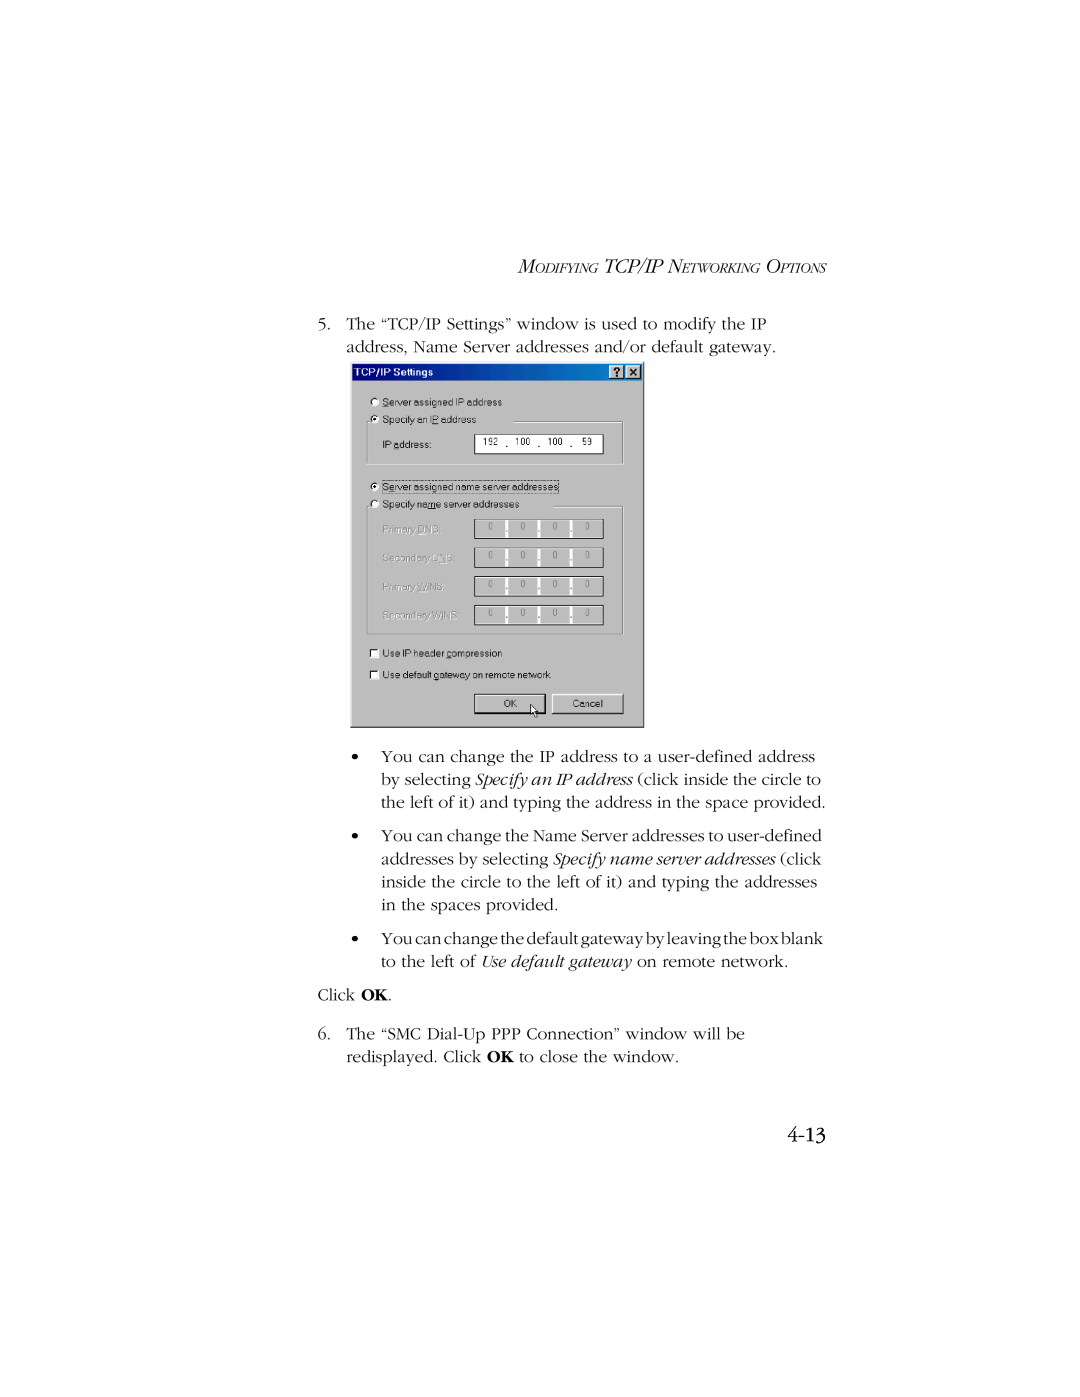 SMC Networks SMC7003-USB manual 4-13, Click OK 